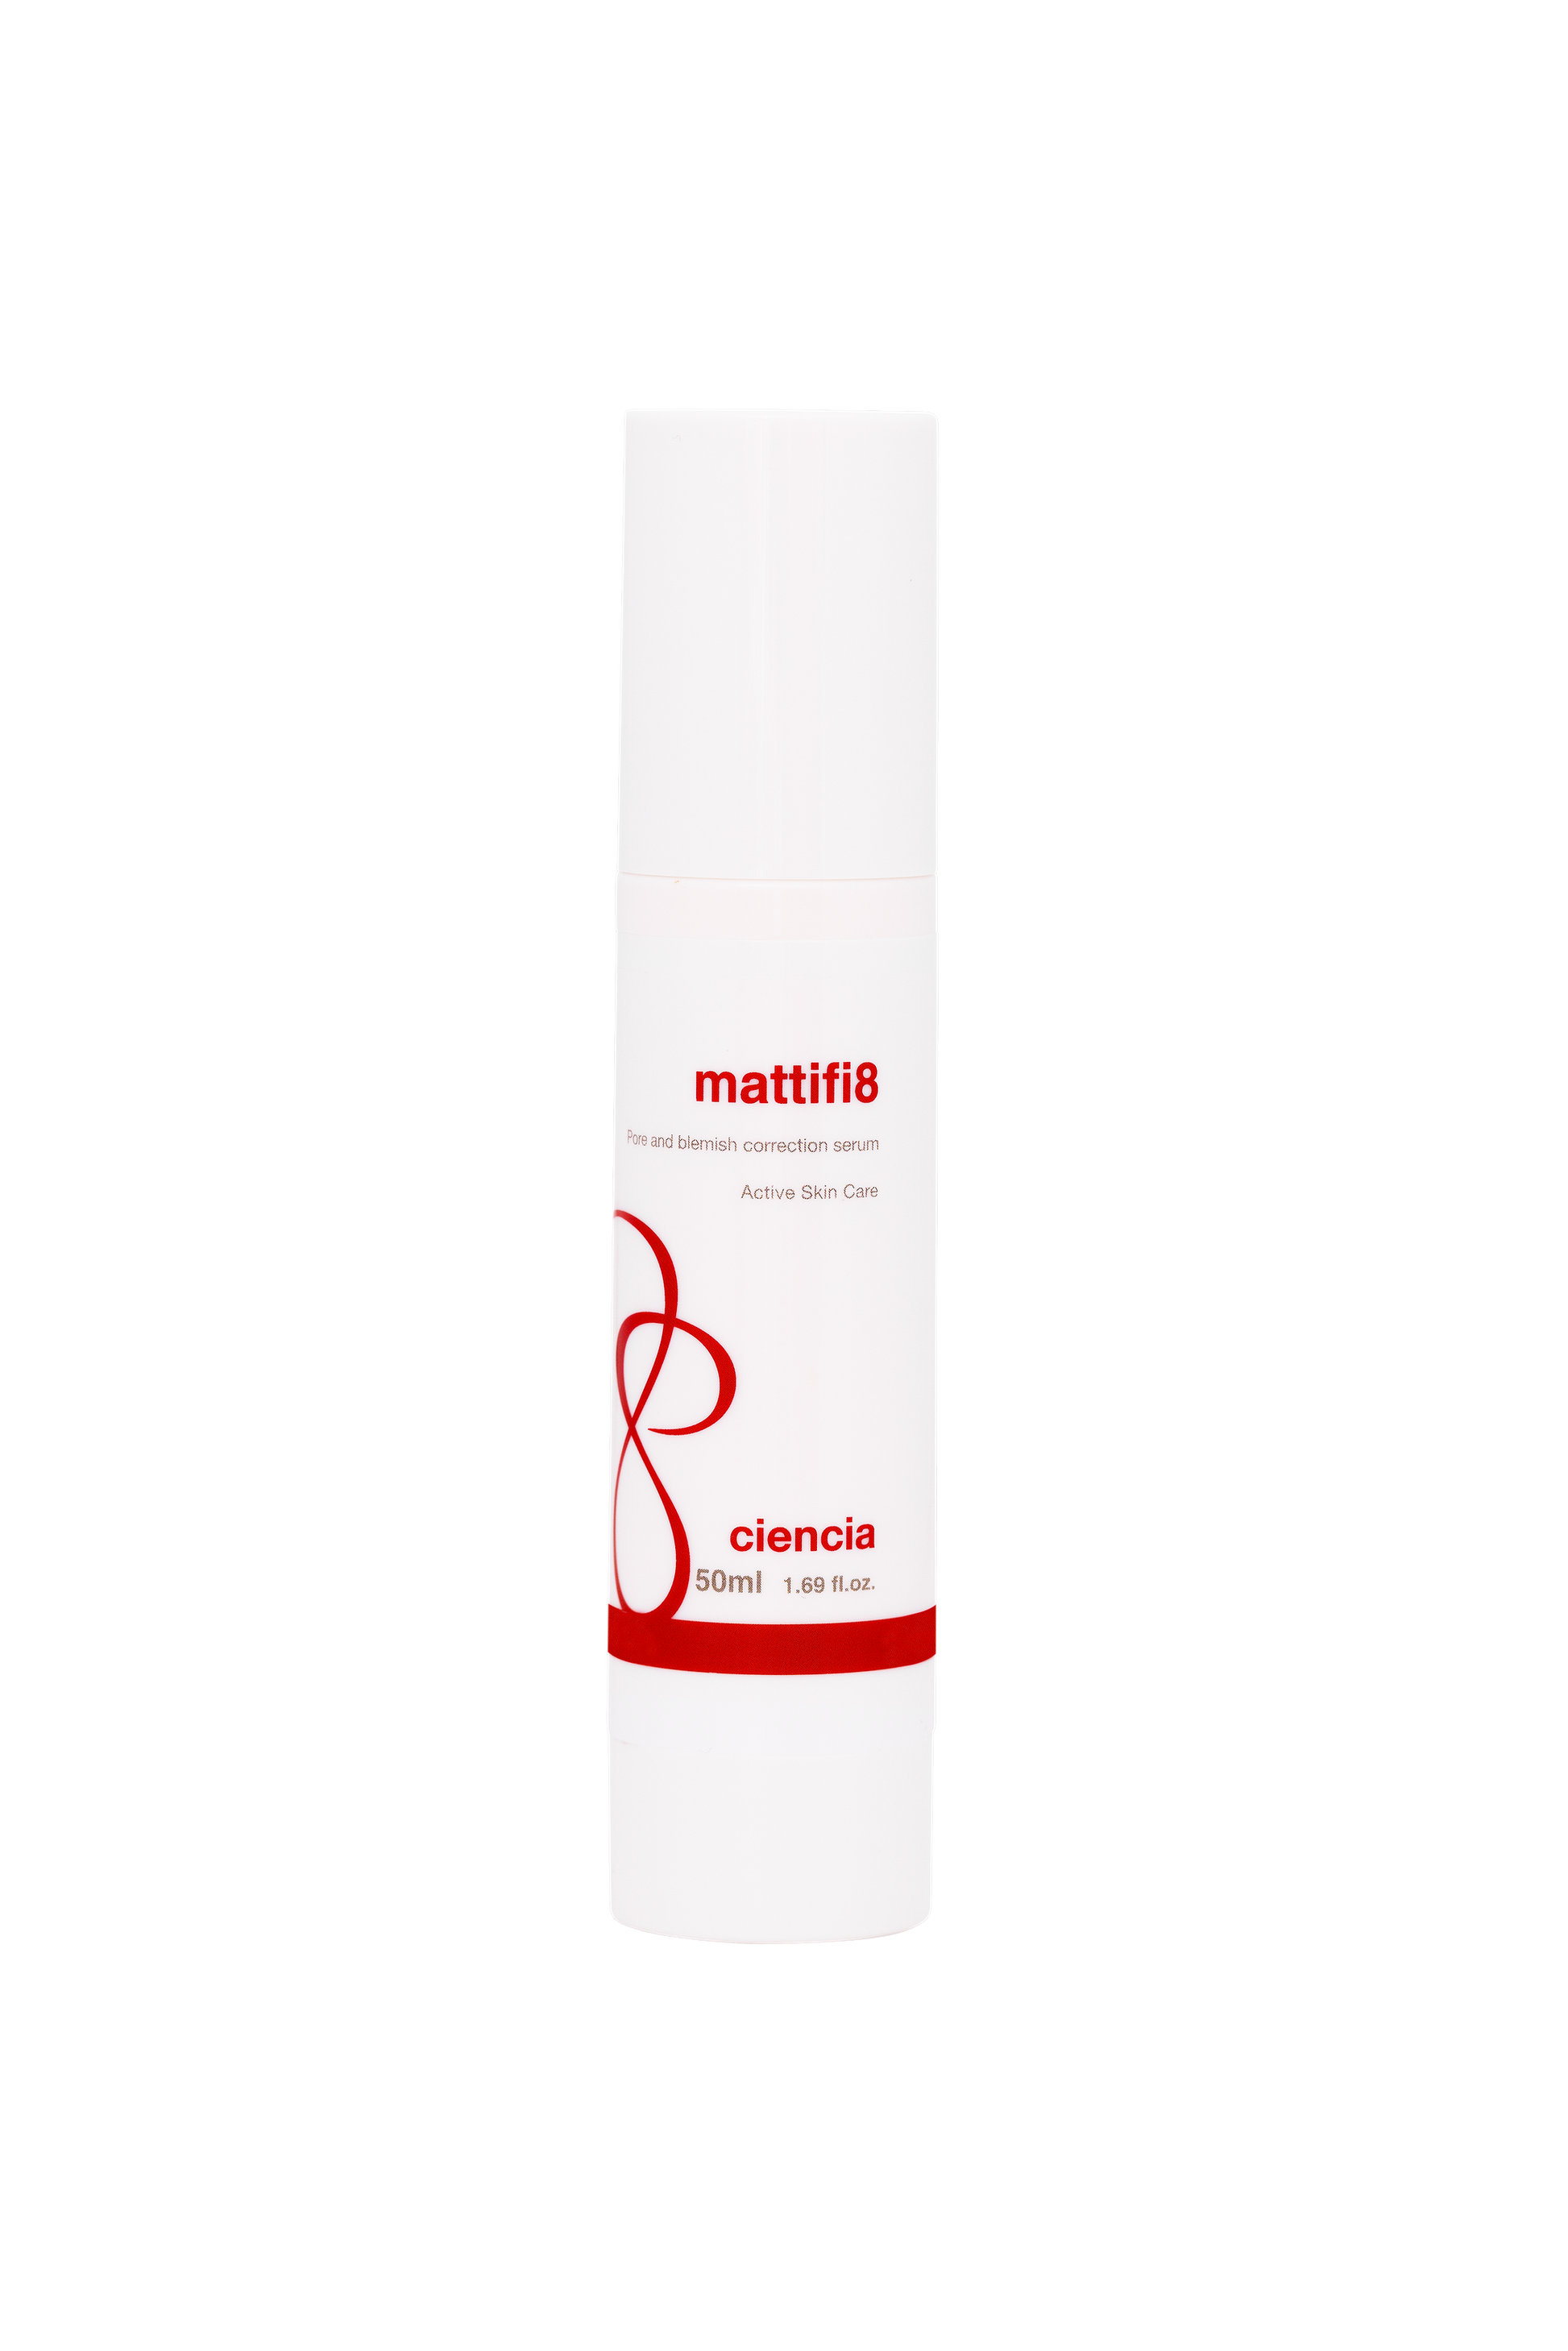 Mattifi8 50ml - Ciencia Skincare